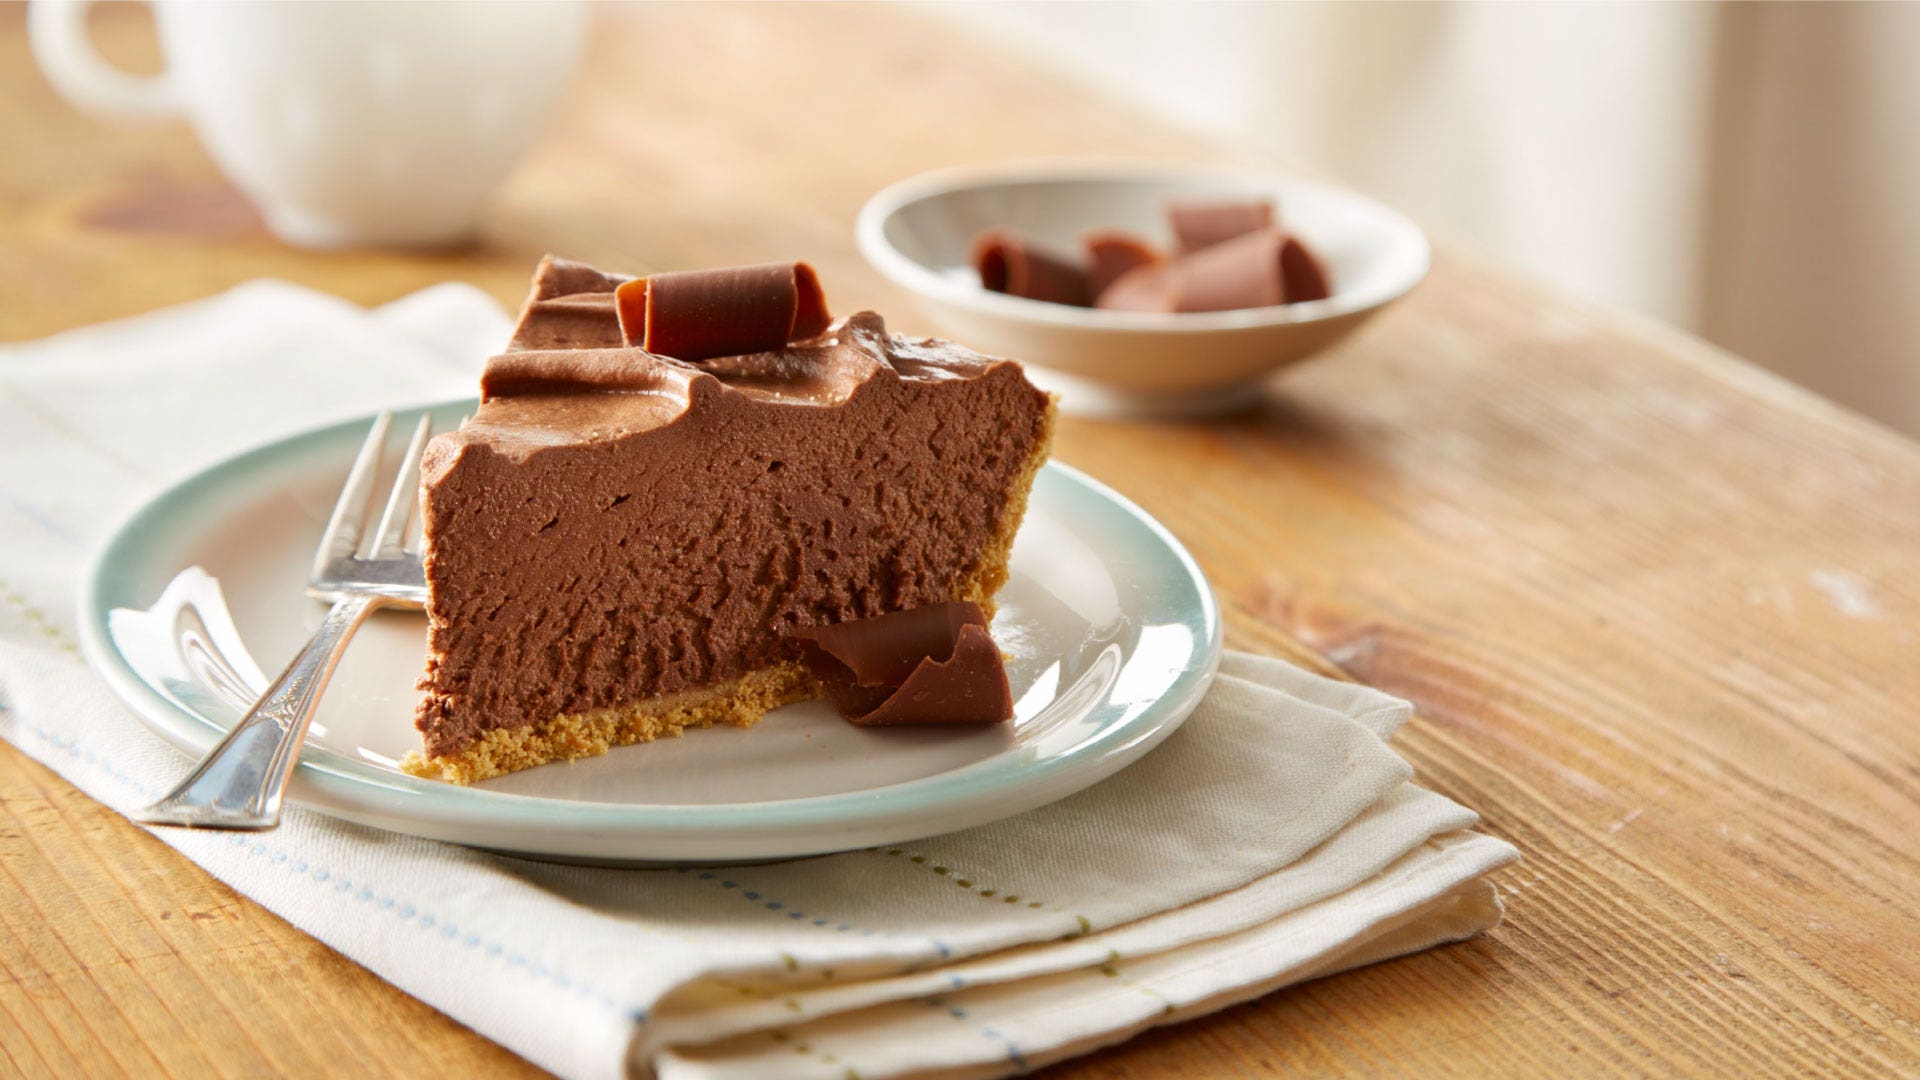 No-Bake Chocolate Cheesecake Recipe